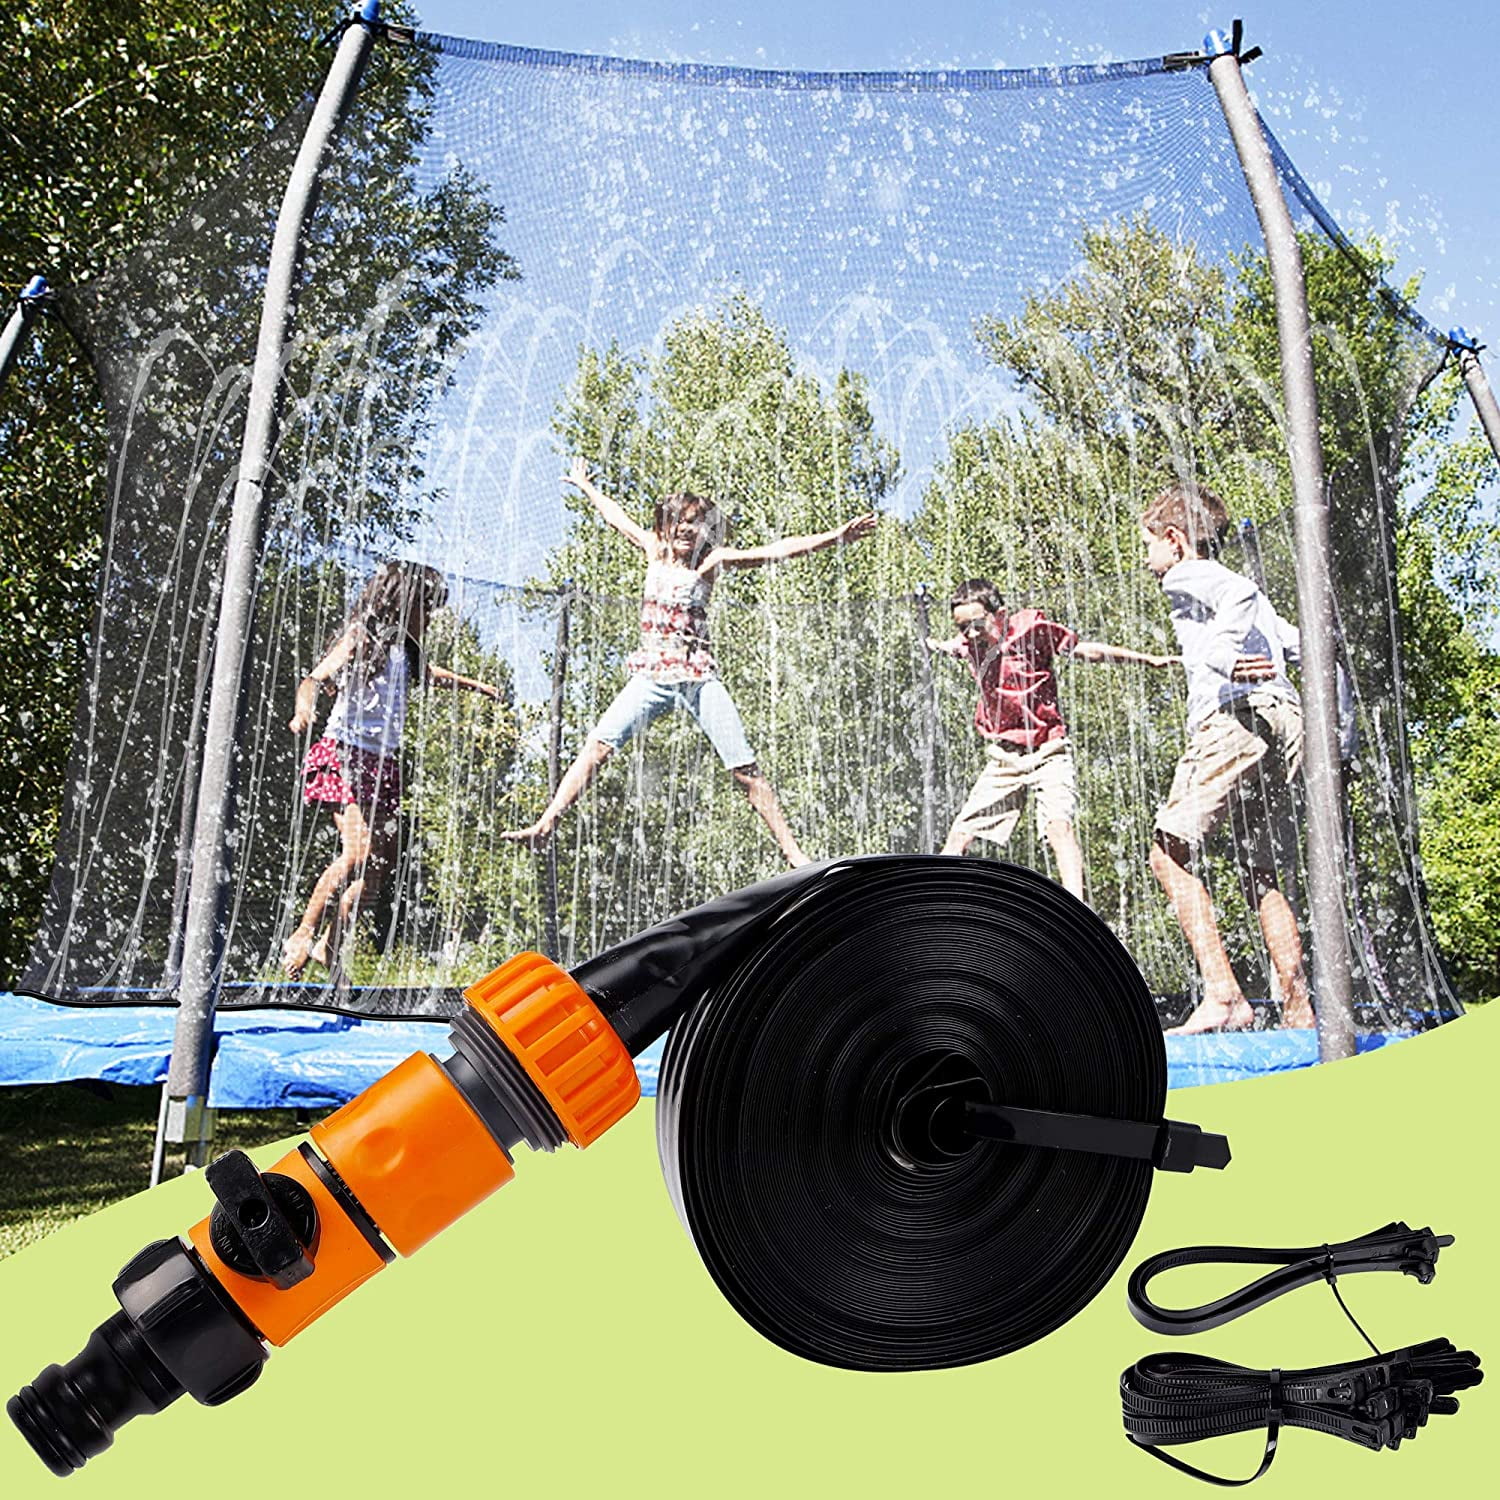 Trampoline Sprinkler, Outdoor Water Park Sprinkler for Kids Summer Fun, Outside Water Toy Attached on Trampoline Safety Net Enclosure (39ft)